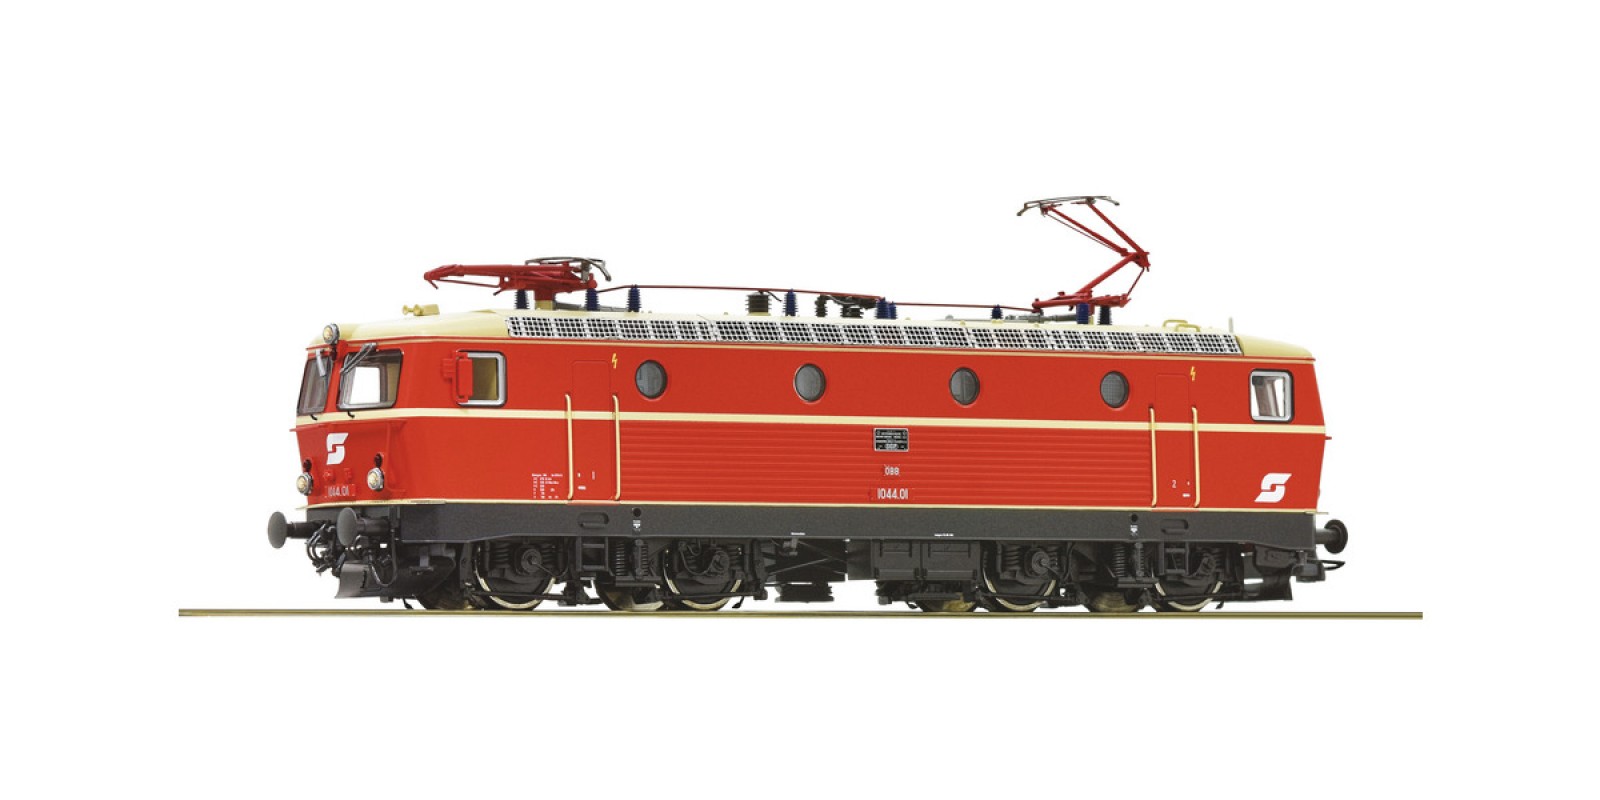 RO70434 Electric locomotive 1044.01, ÖBB